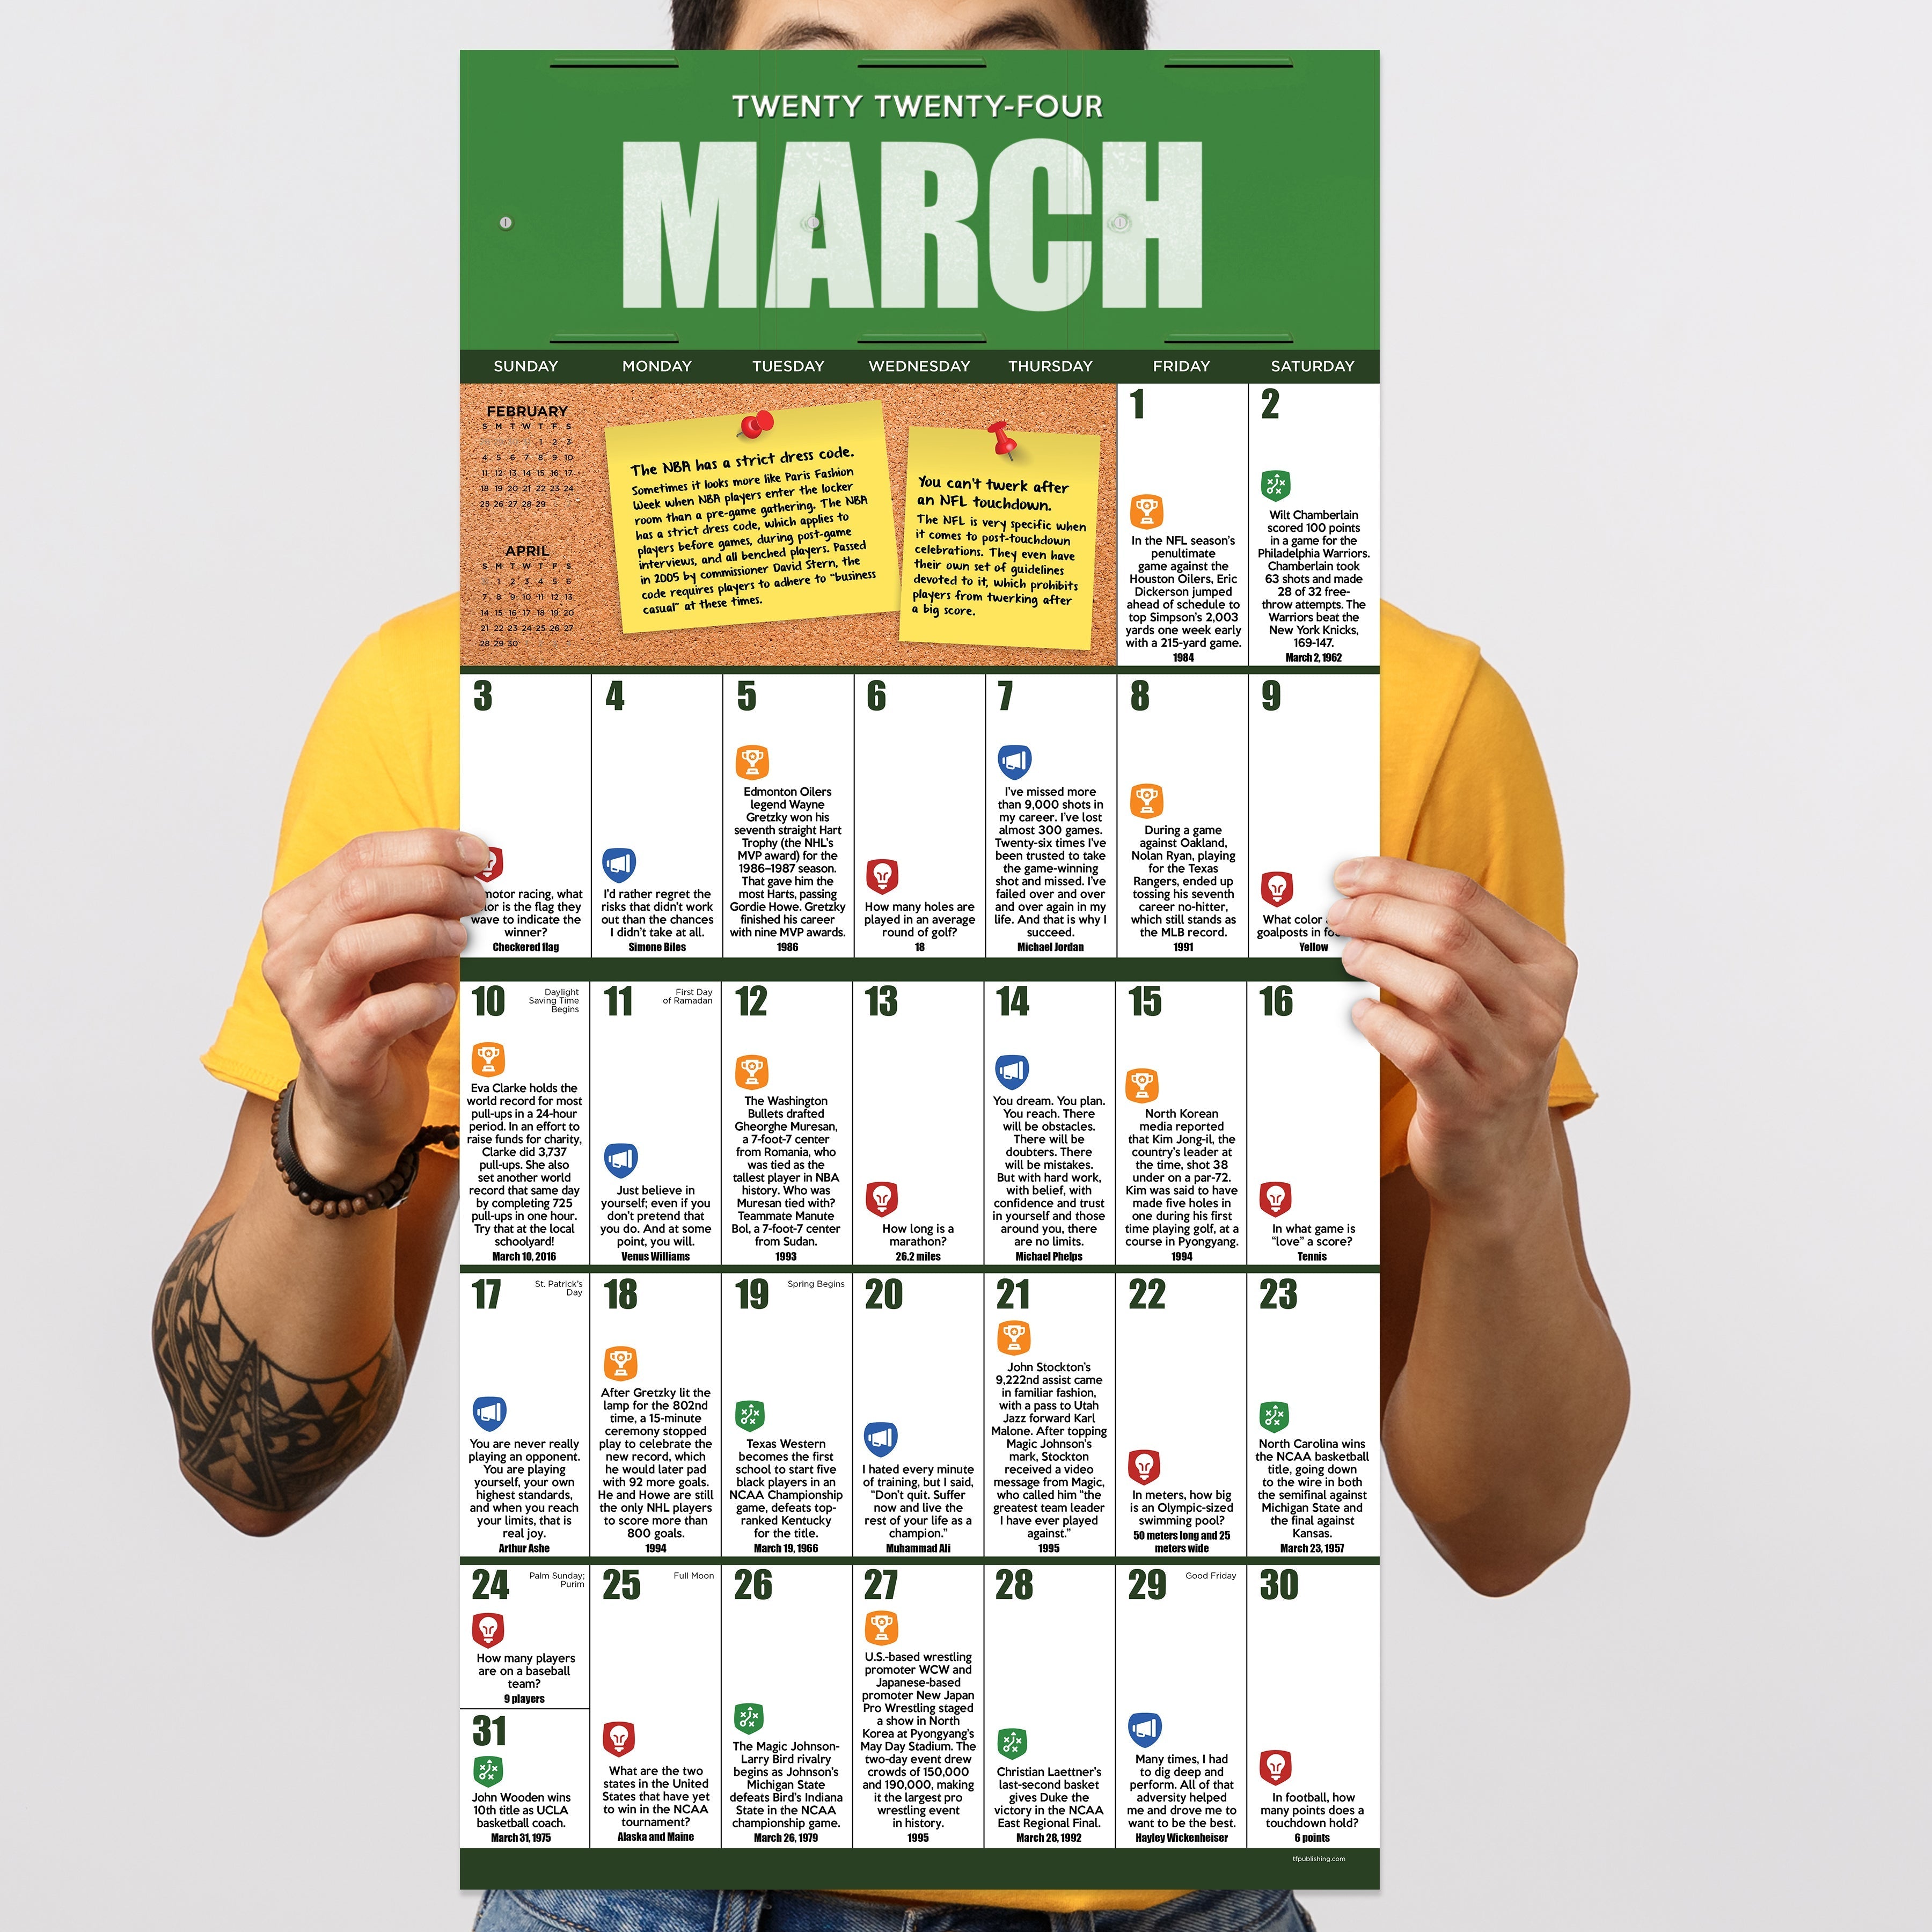 2024 Sports Facts & Trivia - Square Wall Calendar